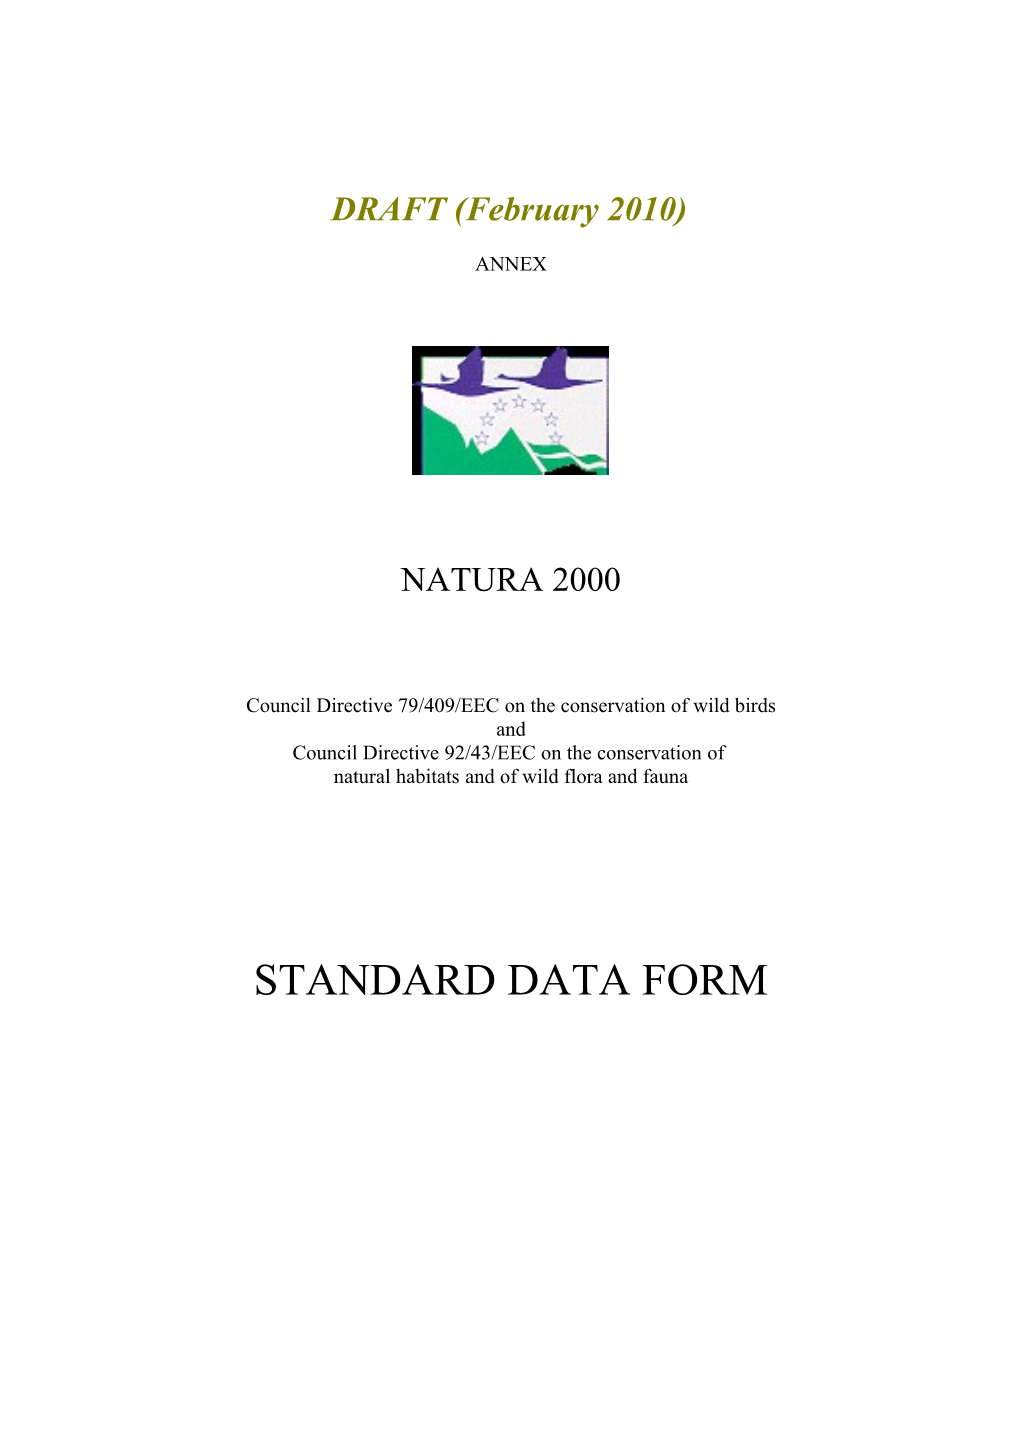 Standard Data Form